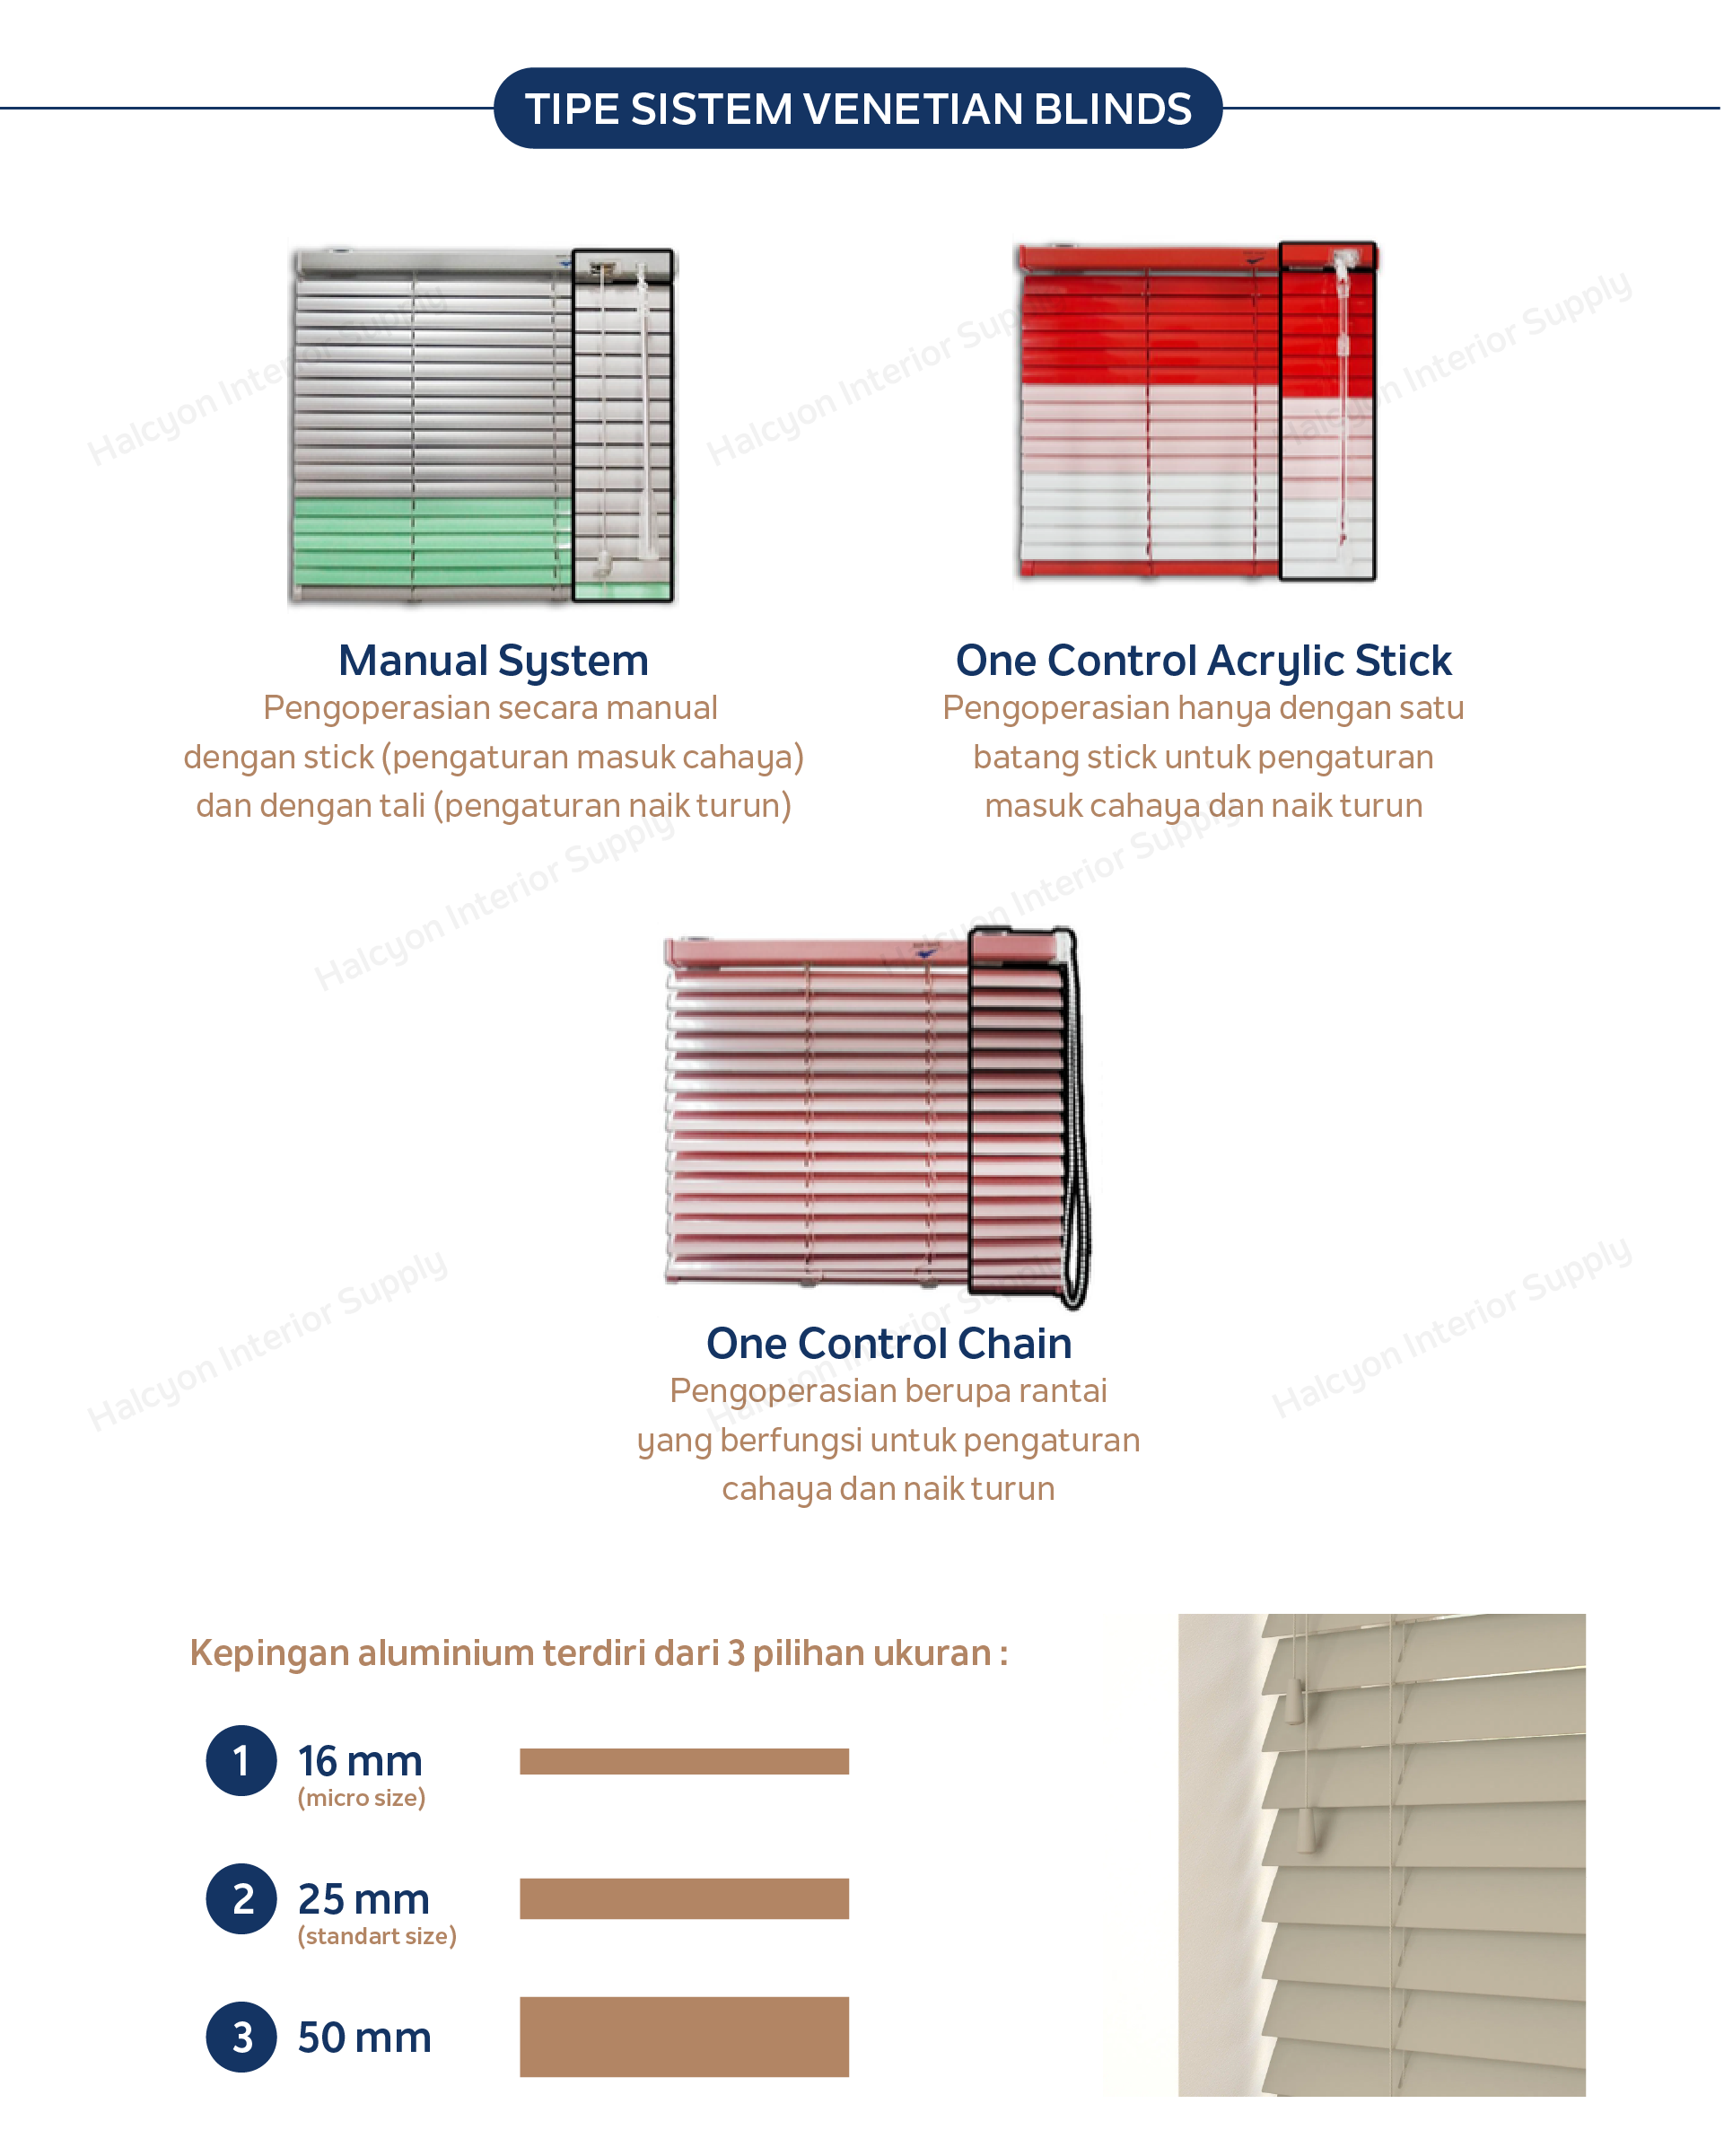 pilihan sistem venetian blinds by Halcyon Interior